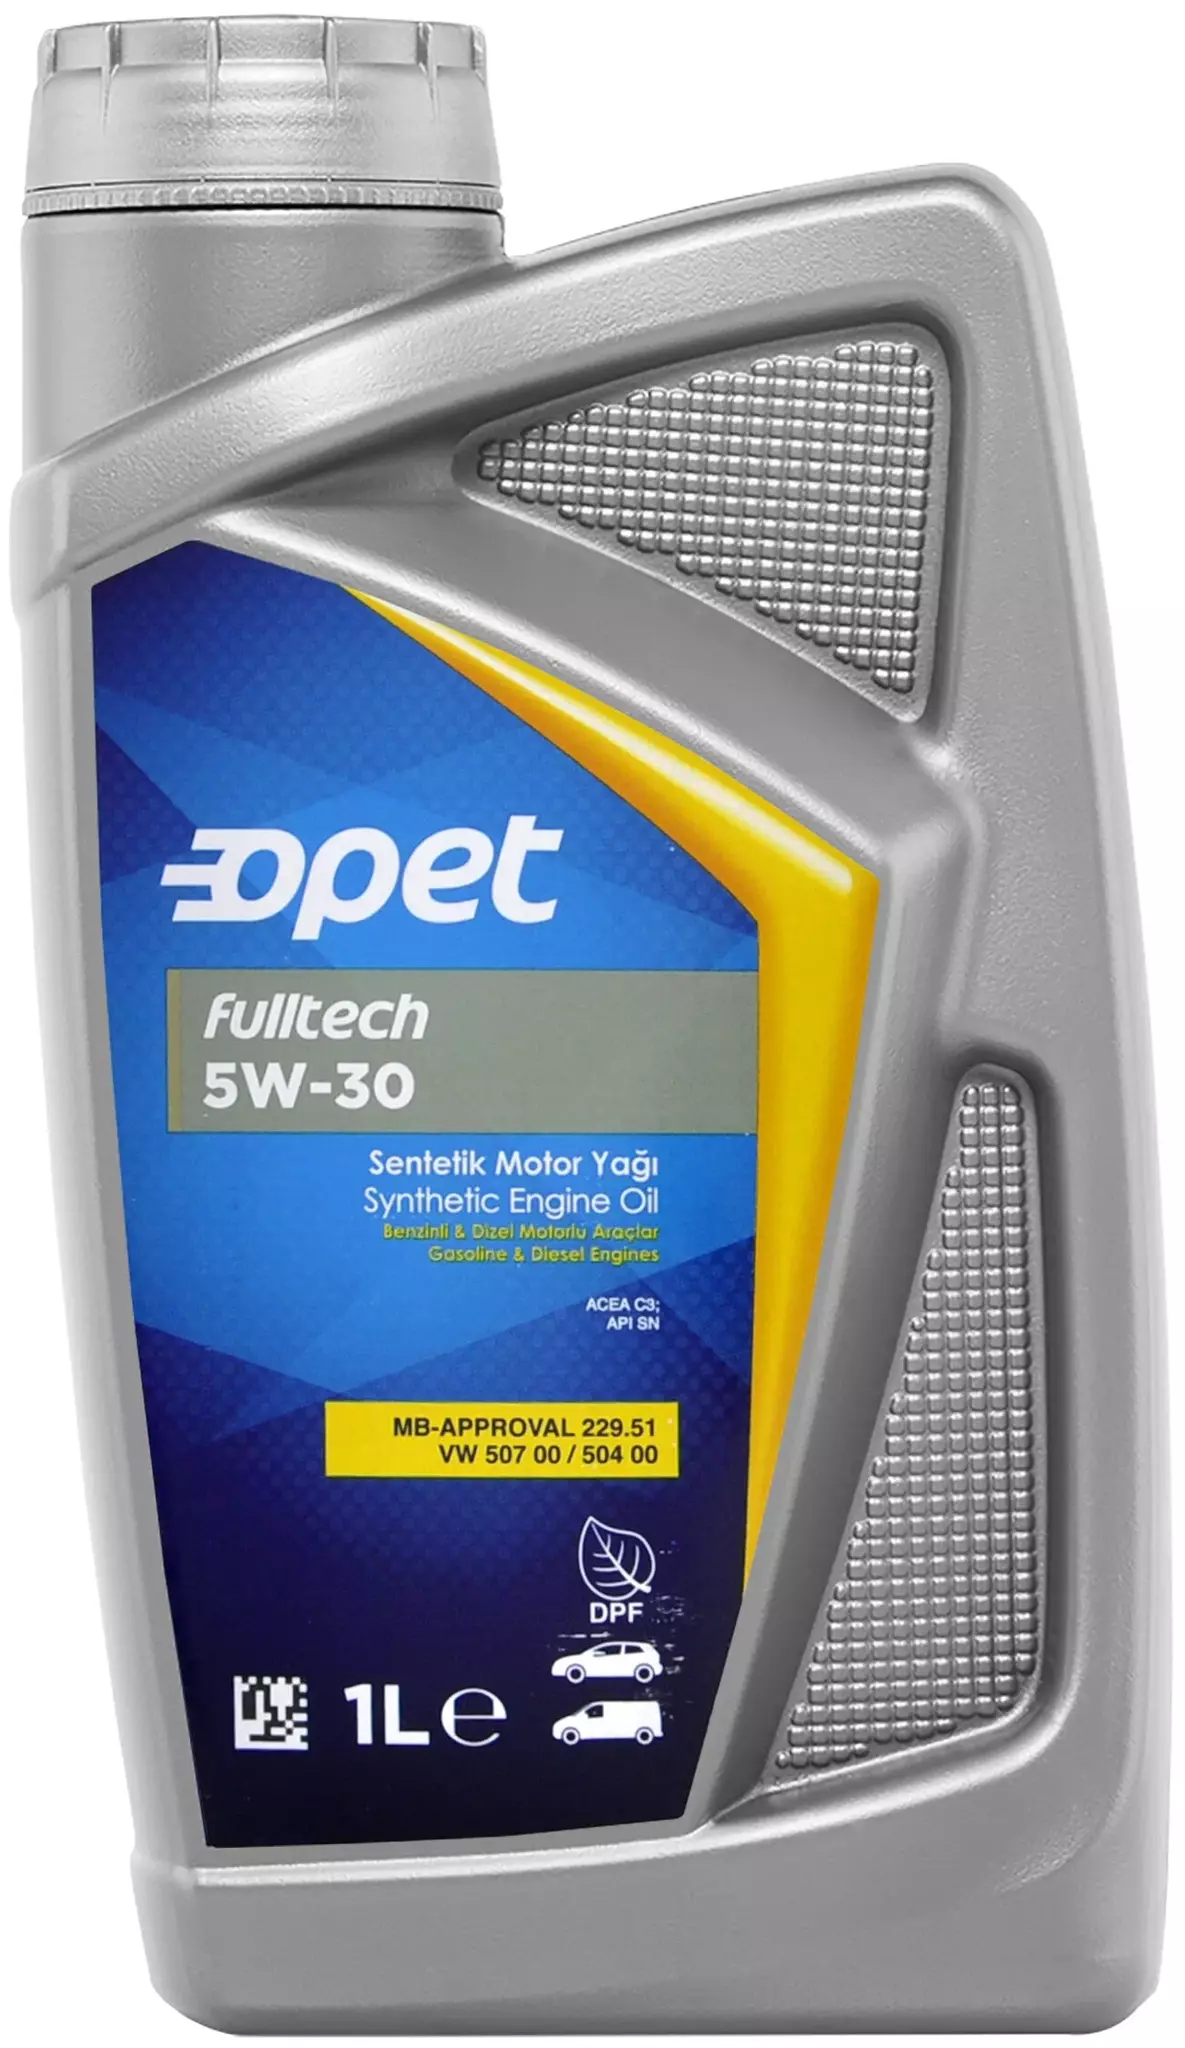 Синтетическое масло OPET Fulltech 5W-30 C3 1л